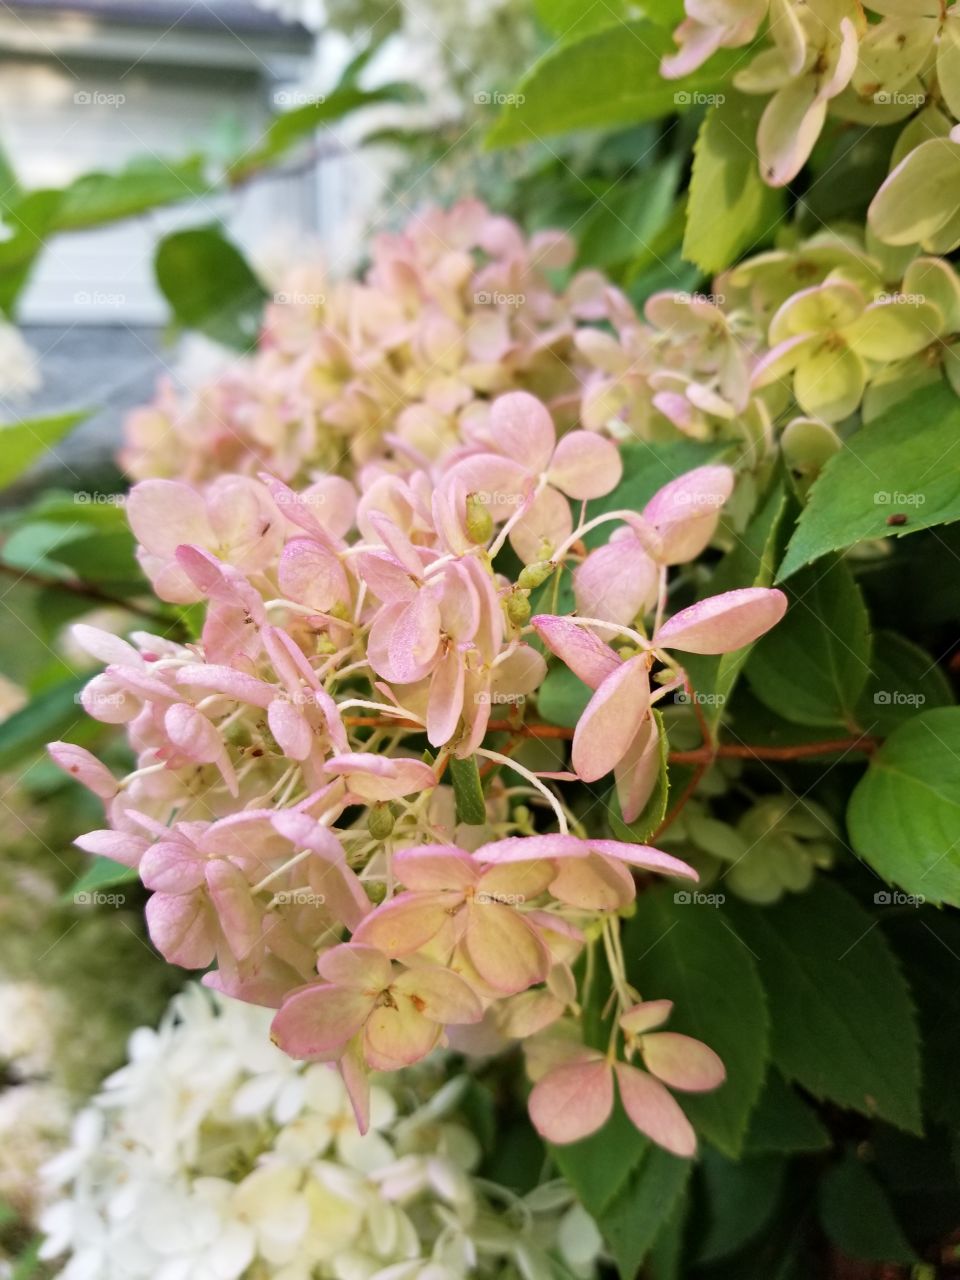 hydrangea white to pink